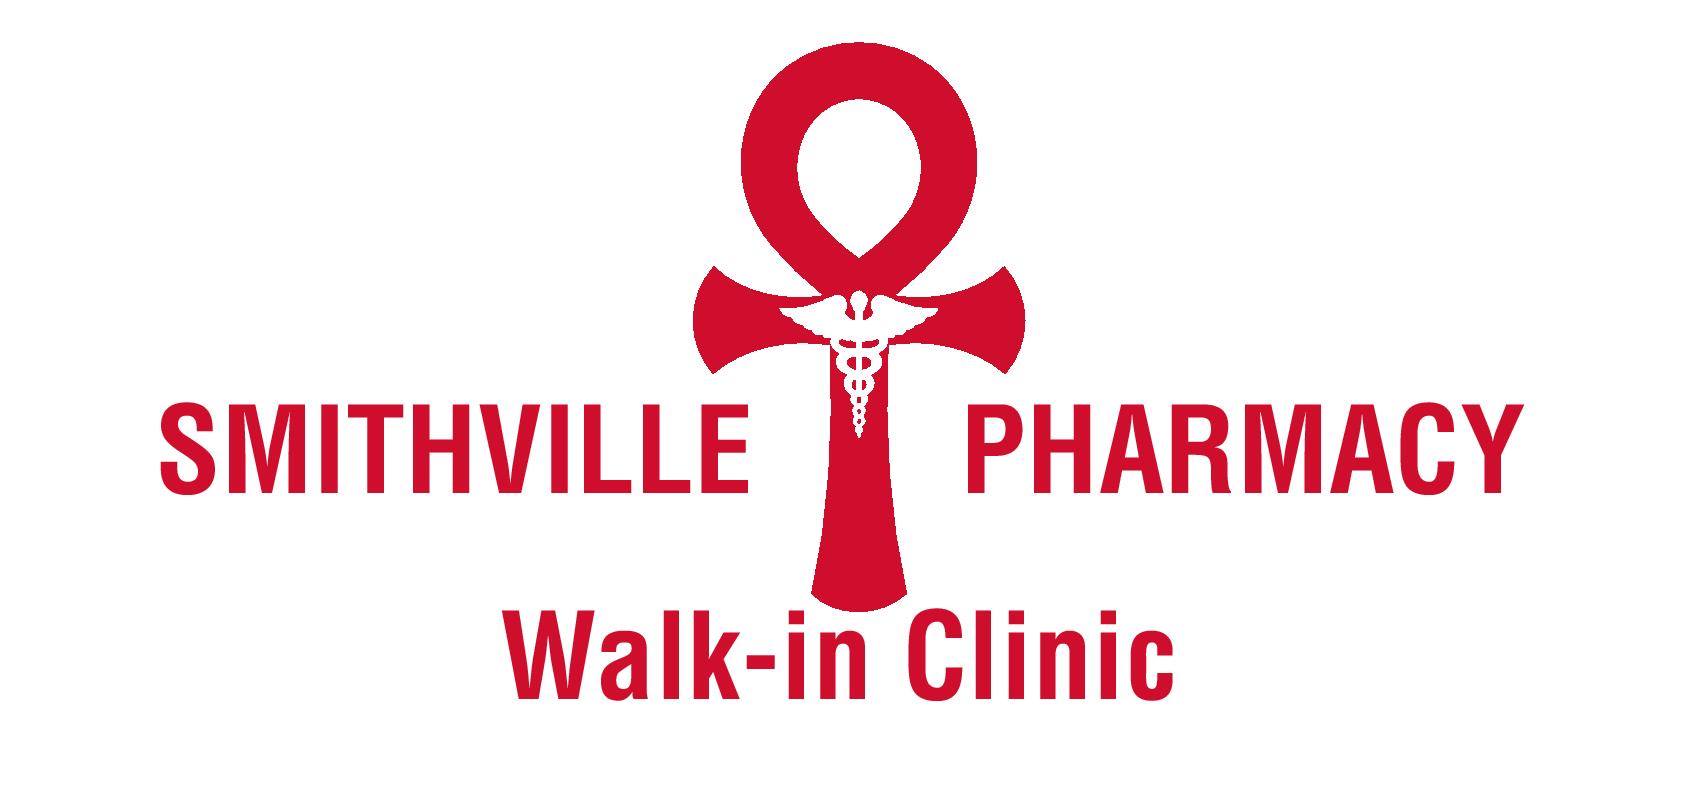 Smithville Pharmacy & Walk-In Clinic